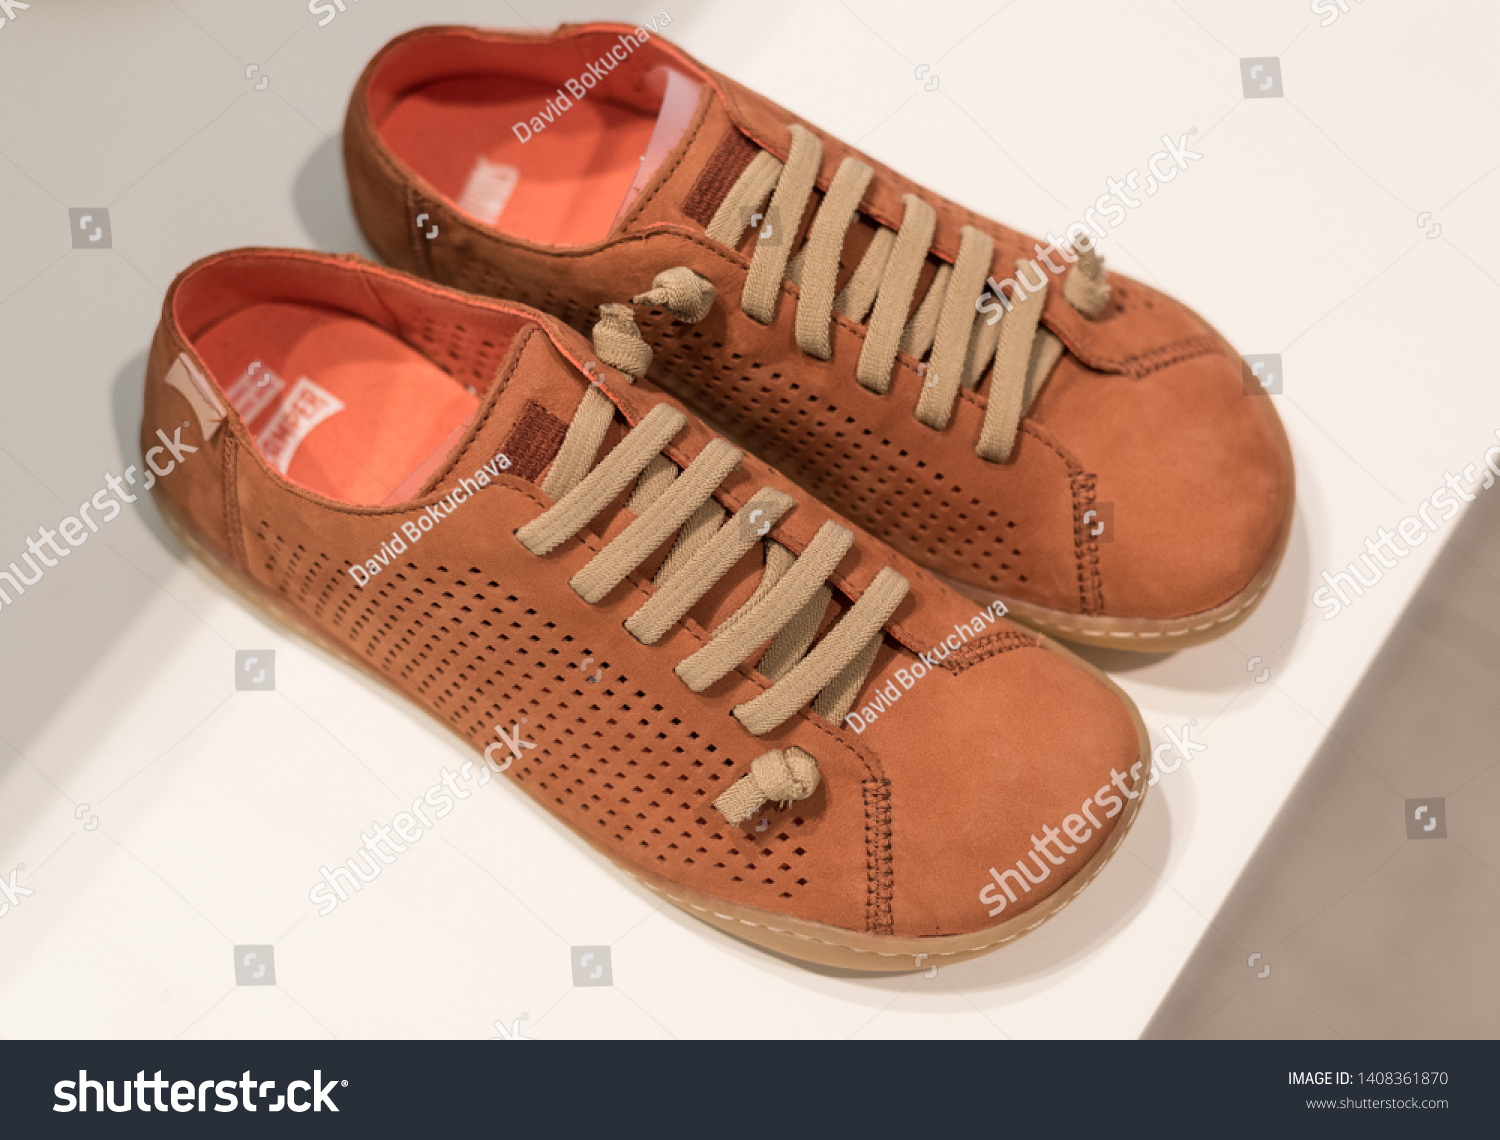 Camper shoes Images, Stock Photos & Vectors | Shutterstock